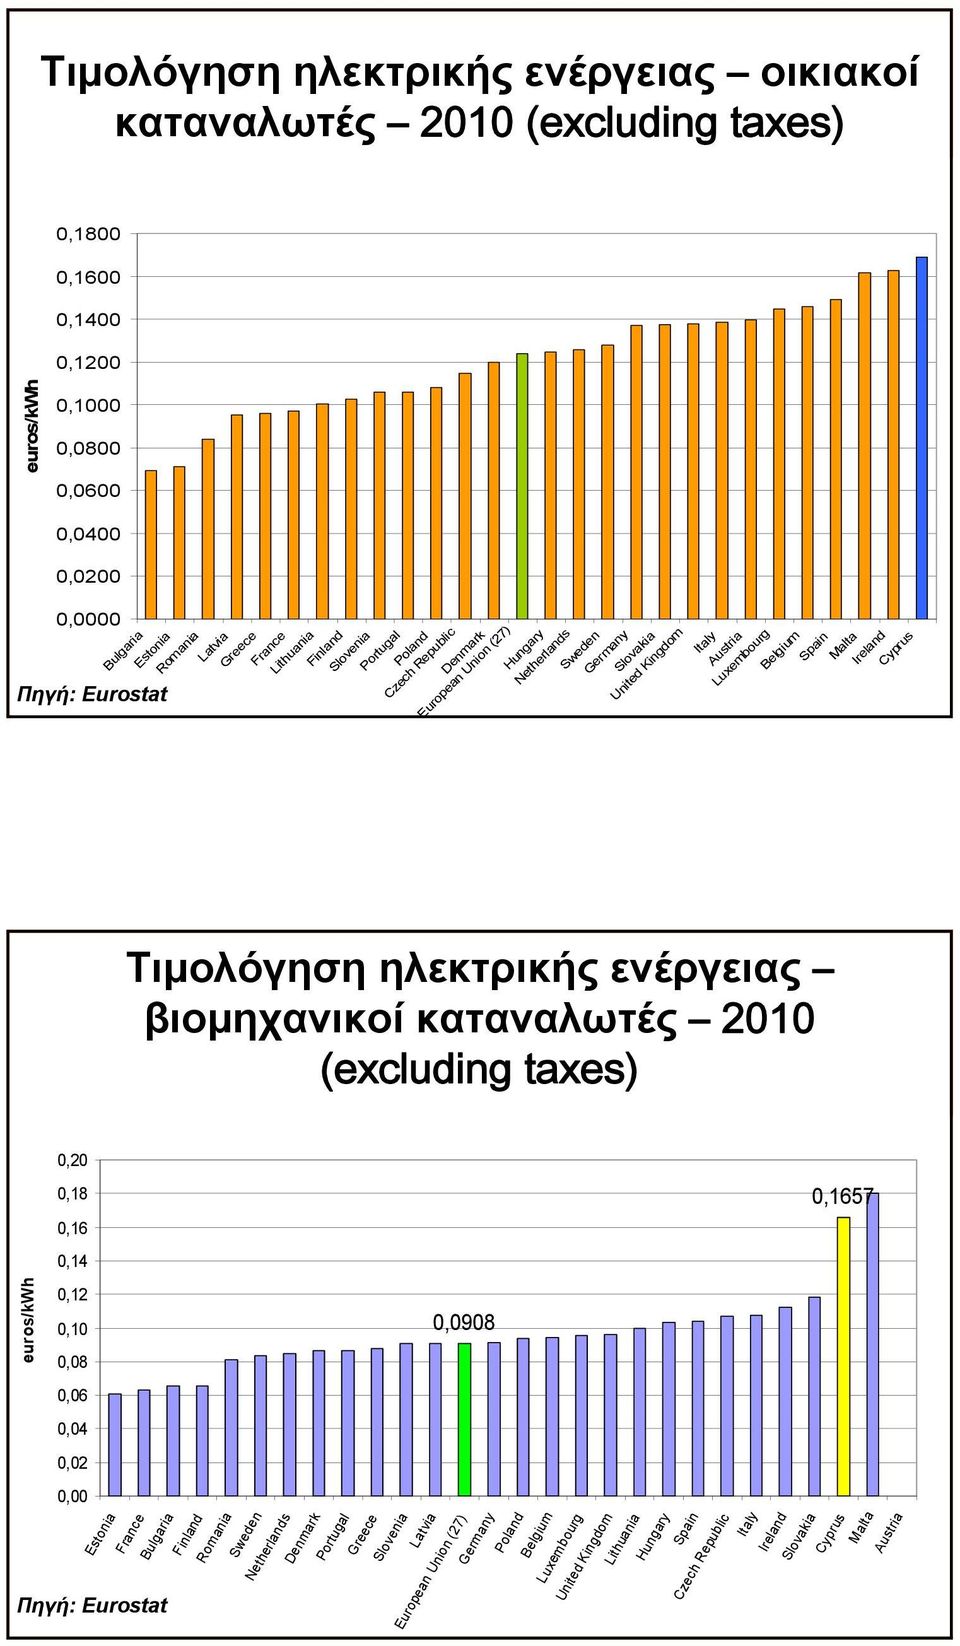 Spain Malta Ireland Cyprus Τιμολόγηση ηλεκτρικής ενέργειας βιομηχανικοί καταναλωτές 2010 (excluding taxes) euros/kwh 0,20 0,18 0,16 0,14 0,12 0,10 0,08 0,06 0,04 0,02 0,00 Estonia France Bulgaria